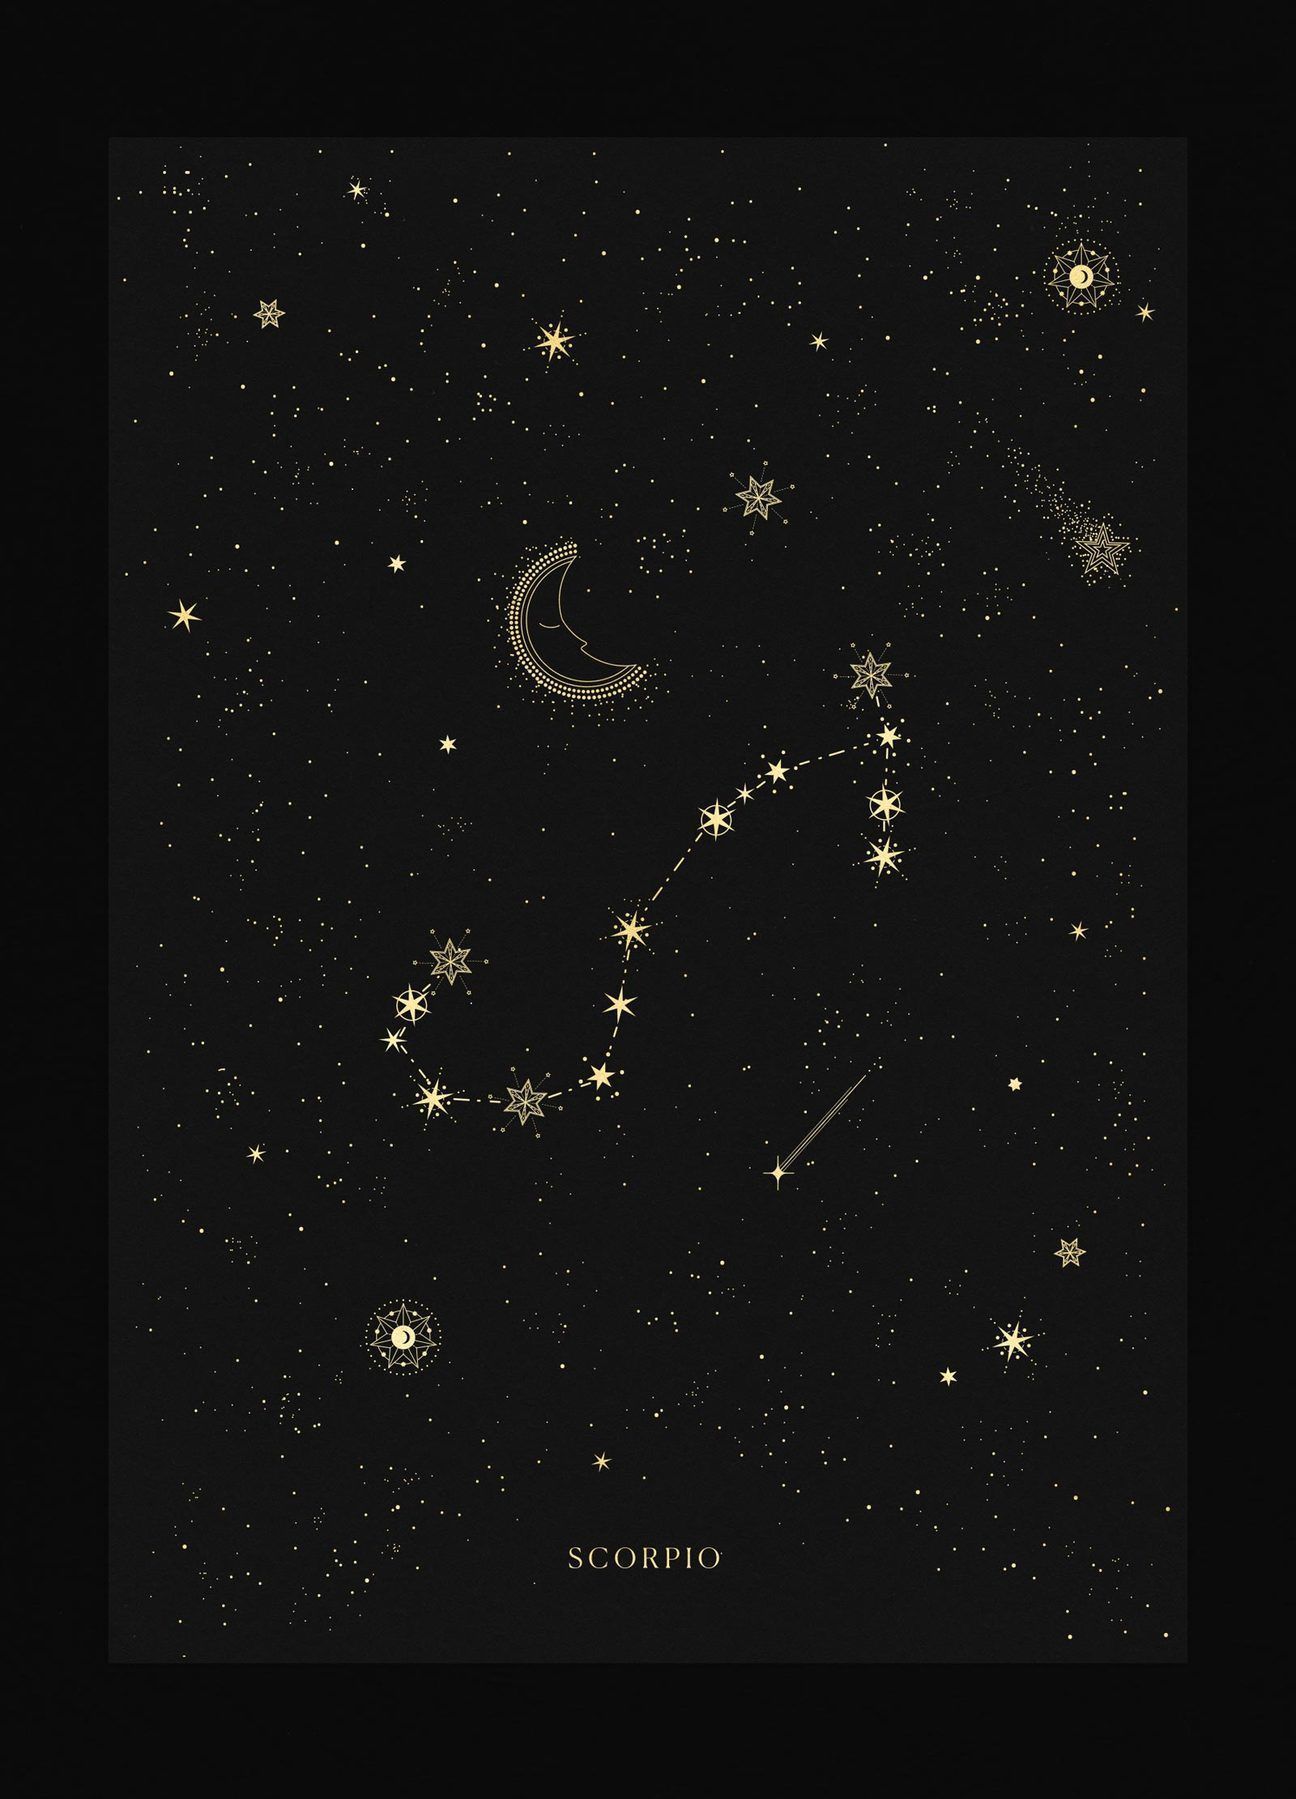 Scorpio Constellation Wallpaper